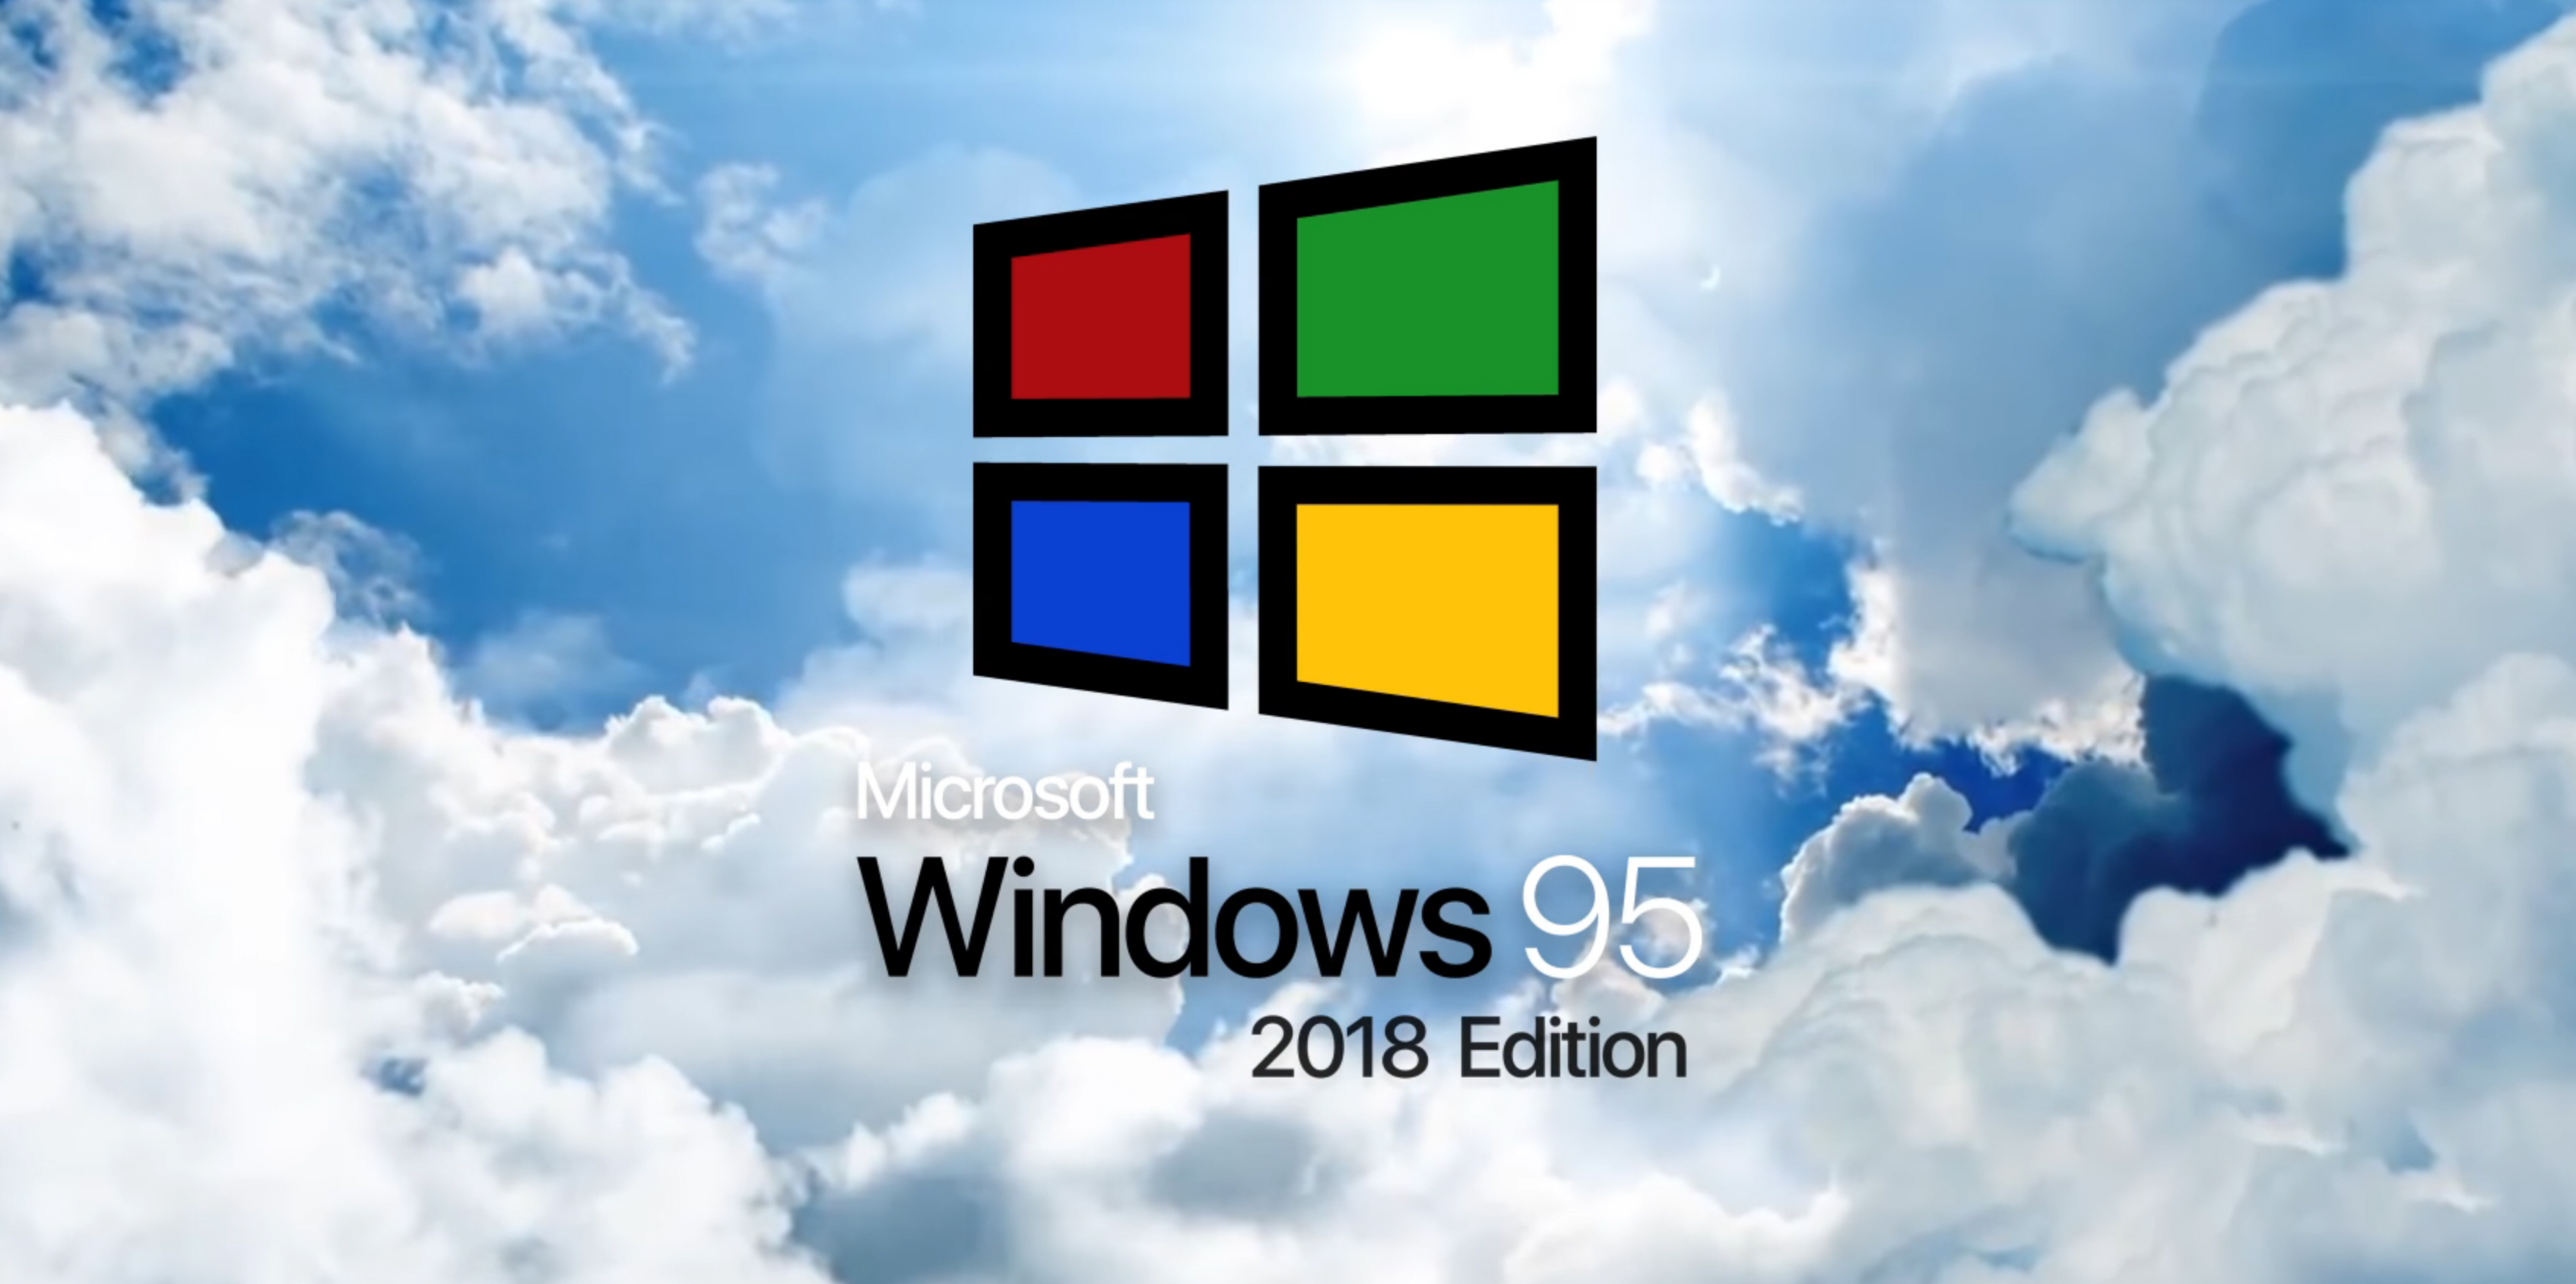 create my own iso image of windows 10